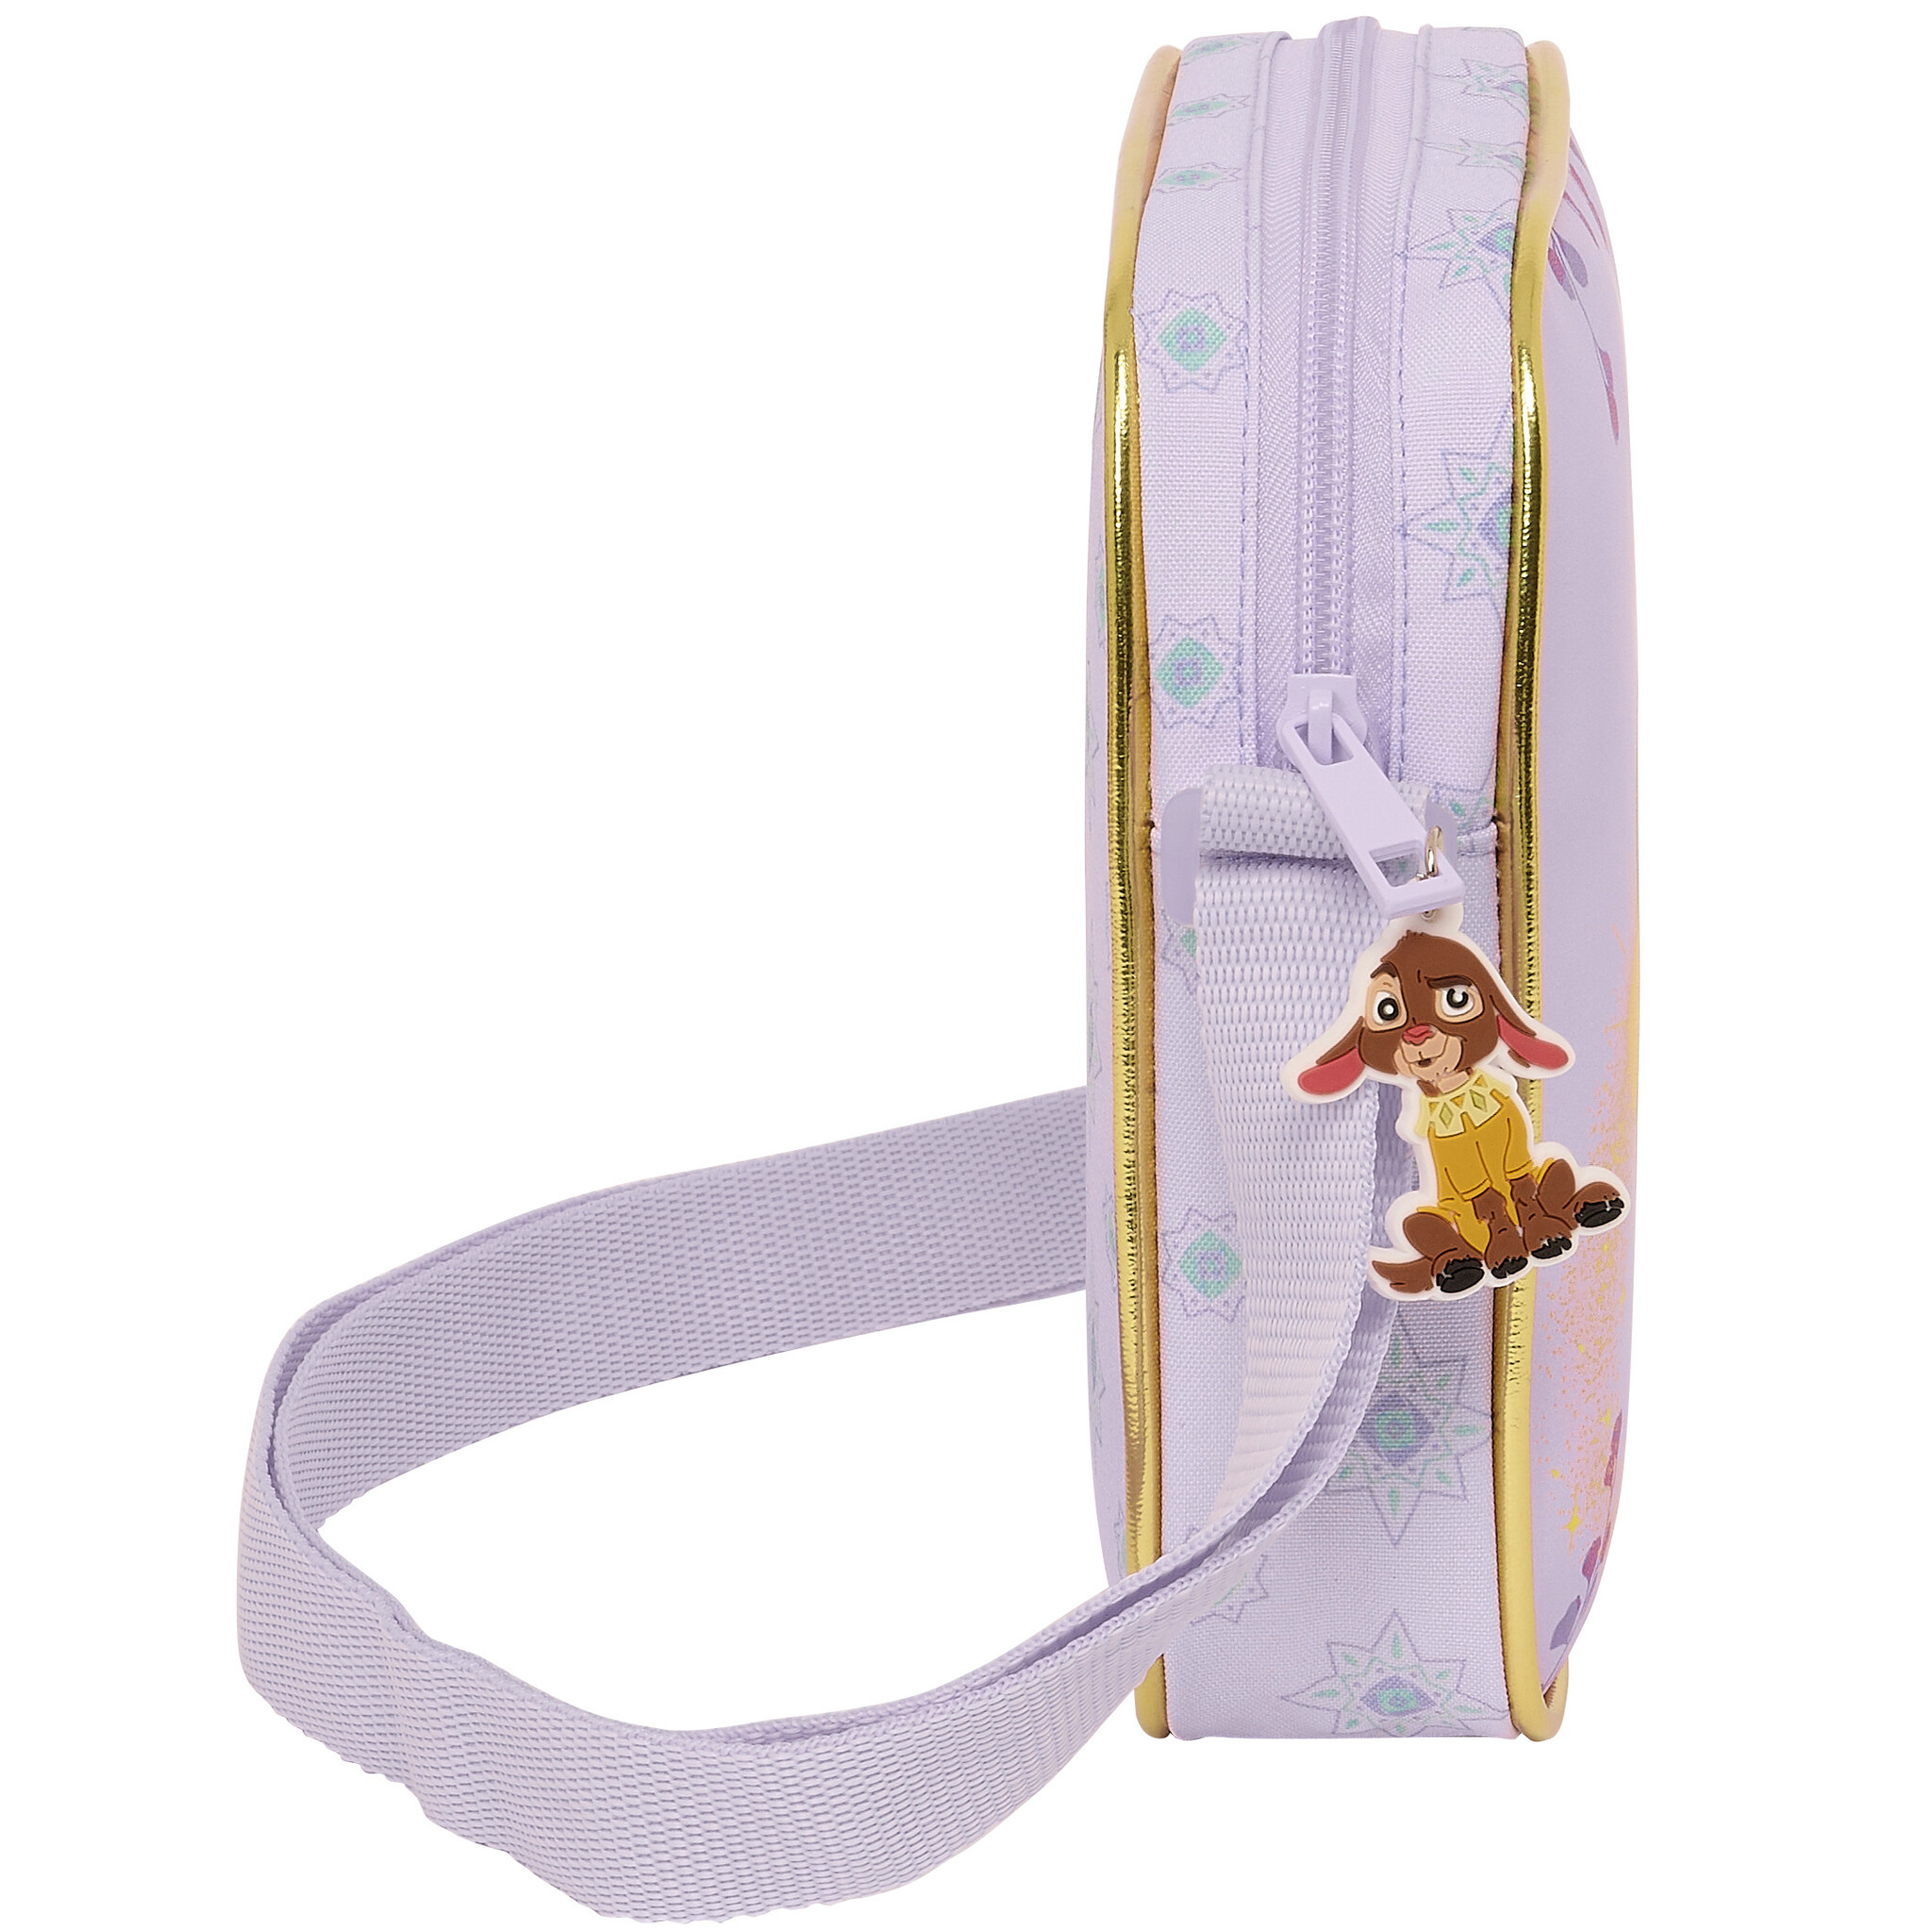 Disney Wish Mini Shoulder Bag, Rosas - 18 x 16 x 4 cm - Polyester